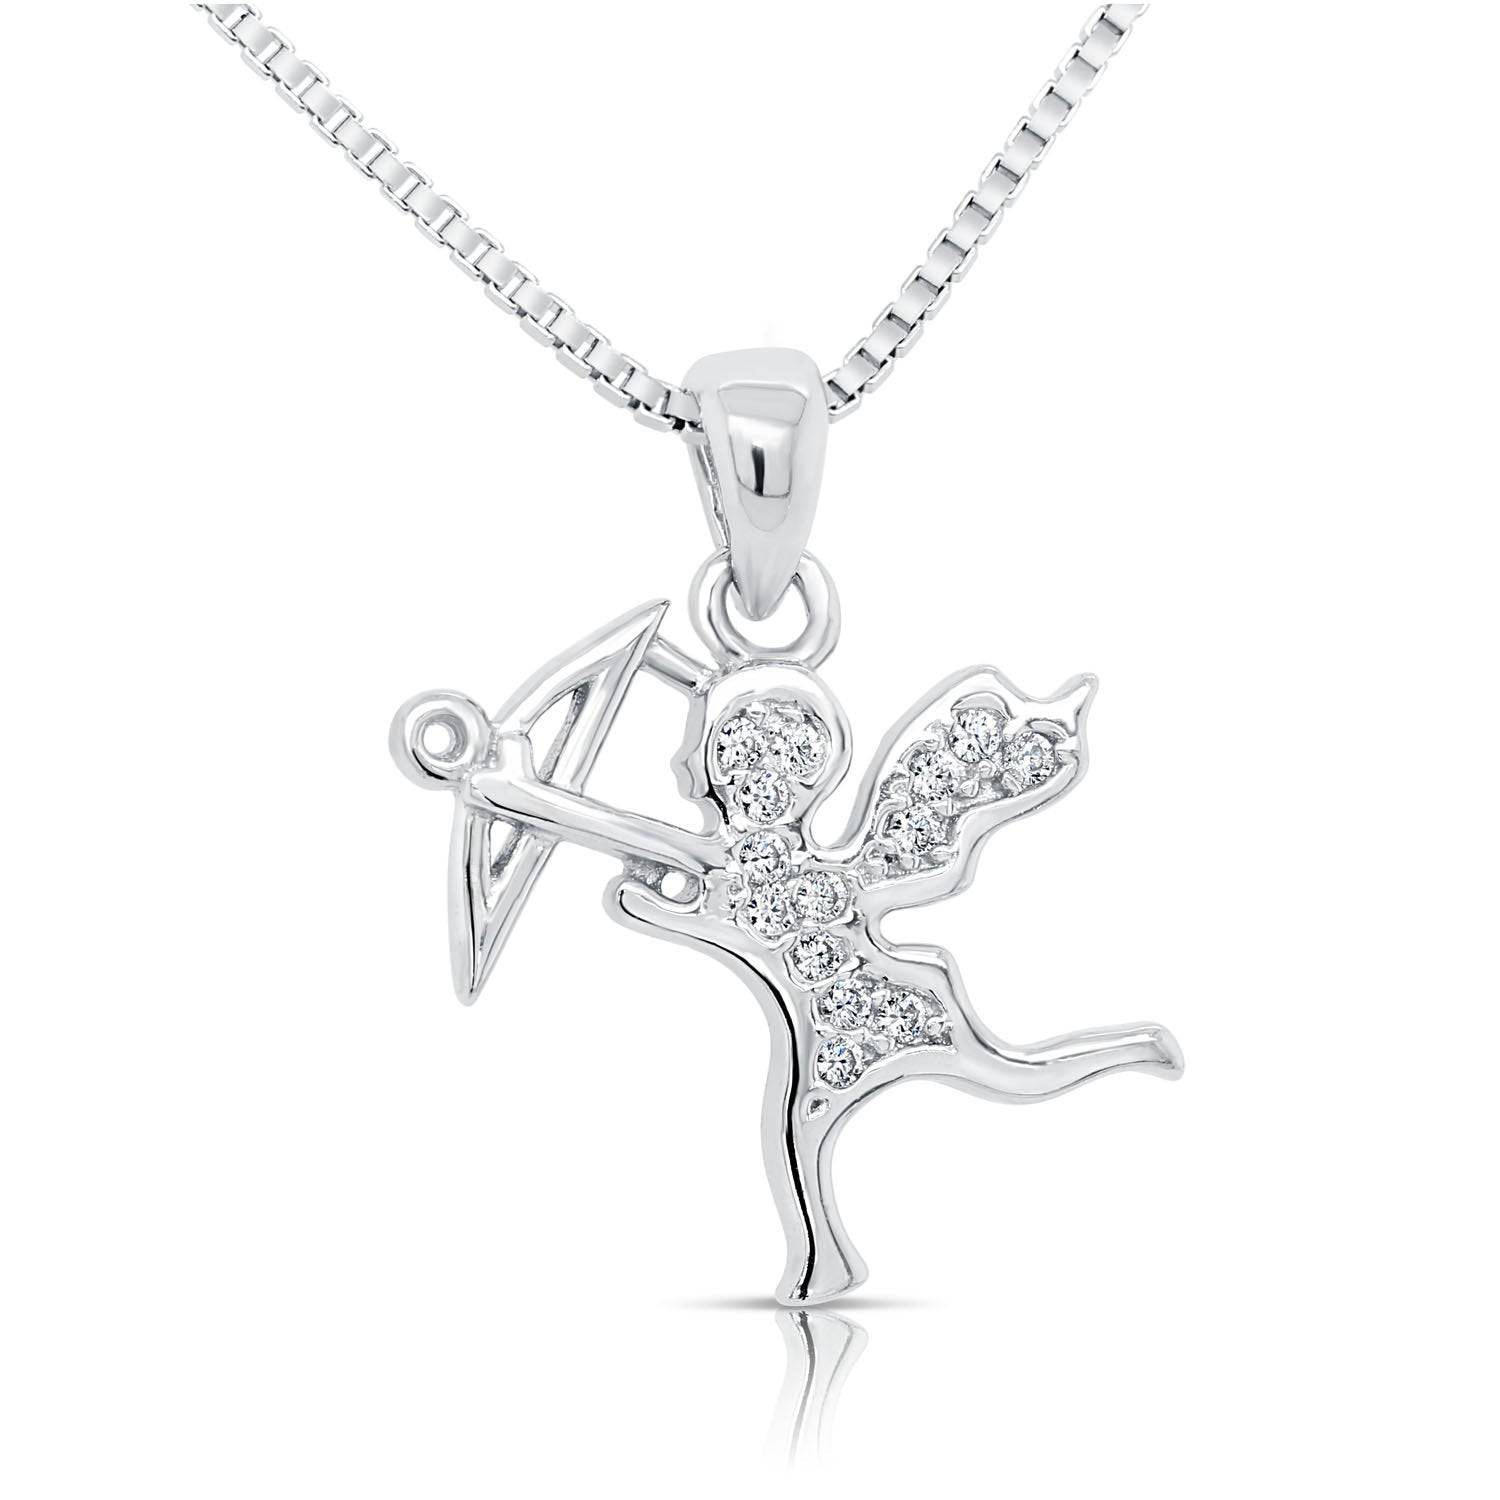 CZ Cupid Charm Necklace, Cherub Cupid in Sterling Silver